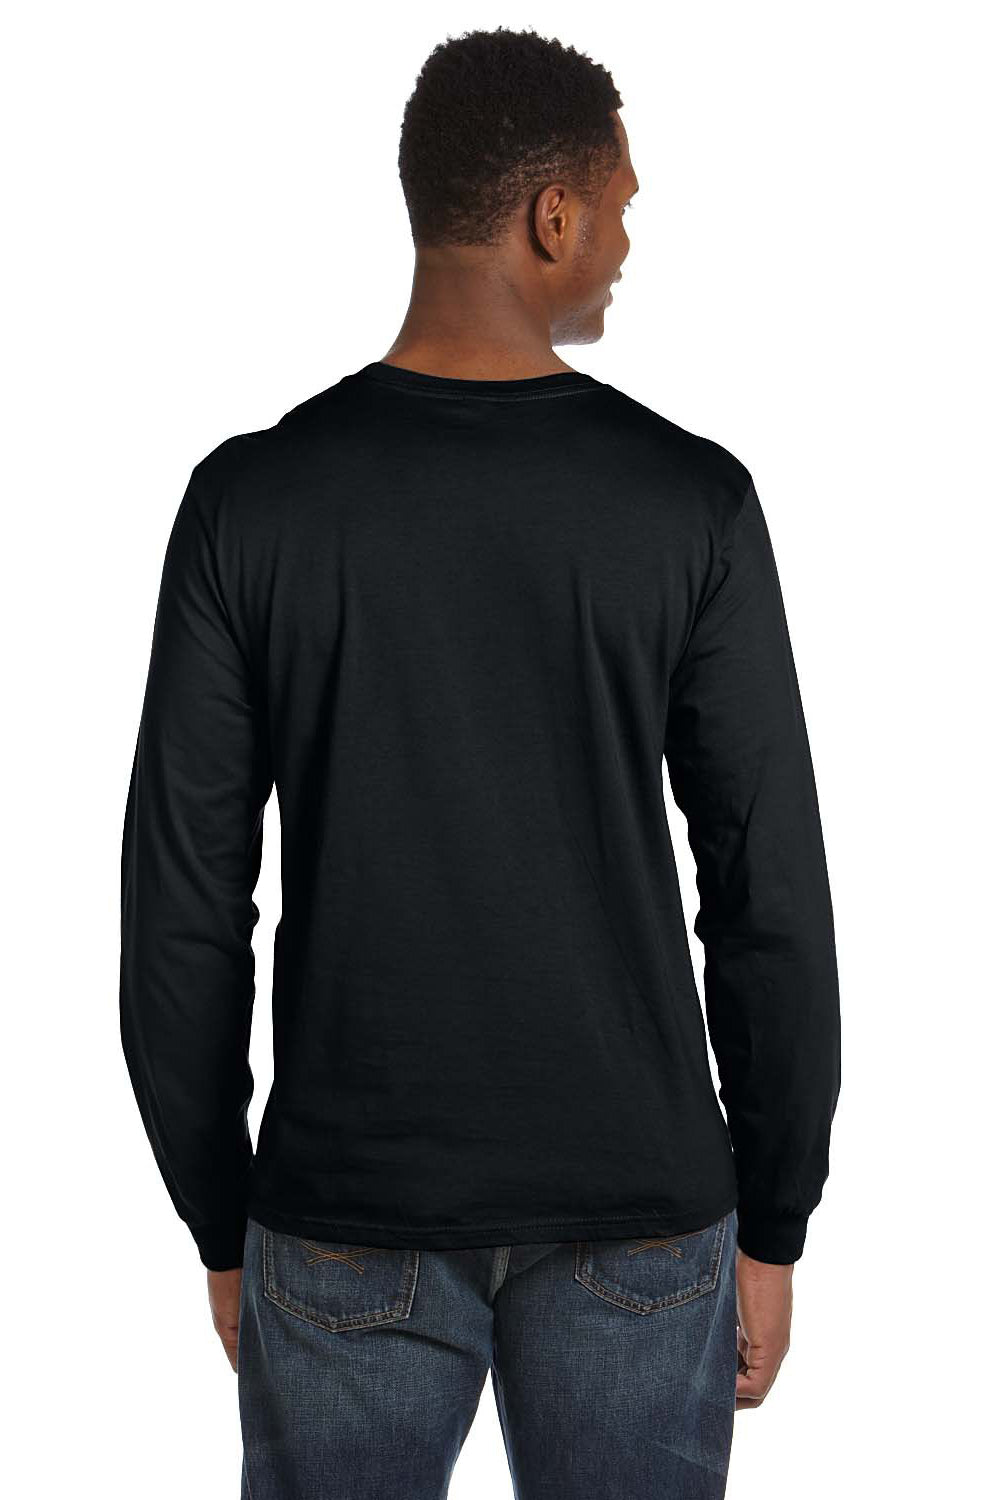 Anvil 949 Mens Long Sleeve Crewneck T-Shirt Black Back